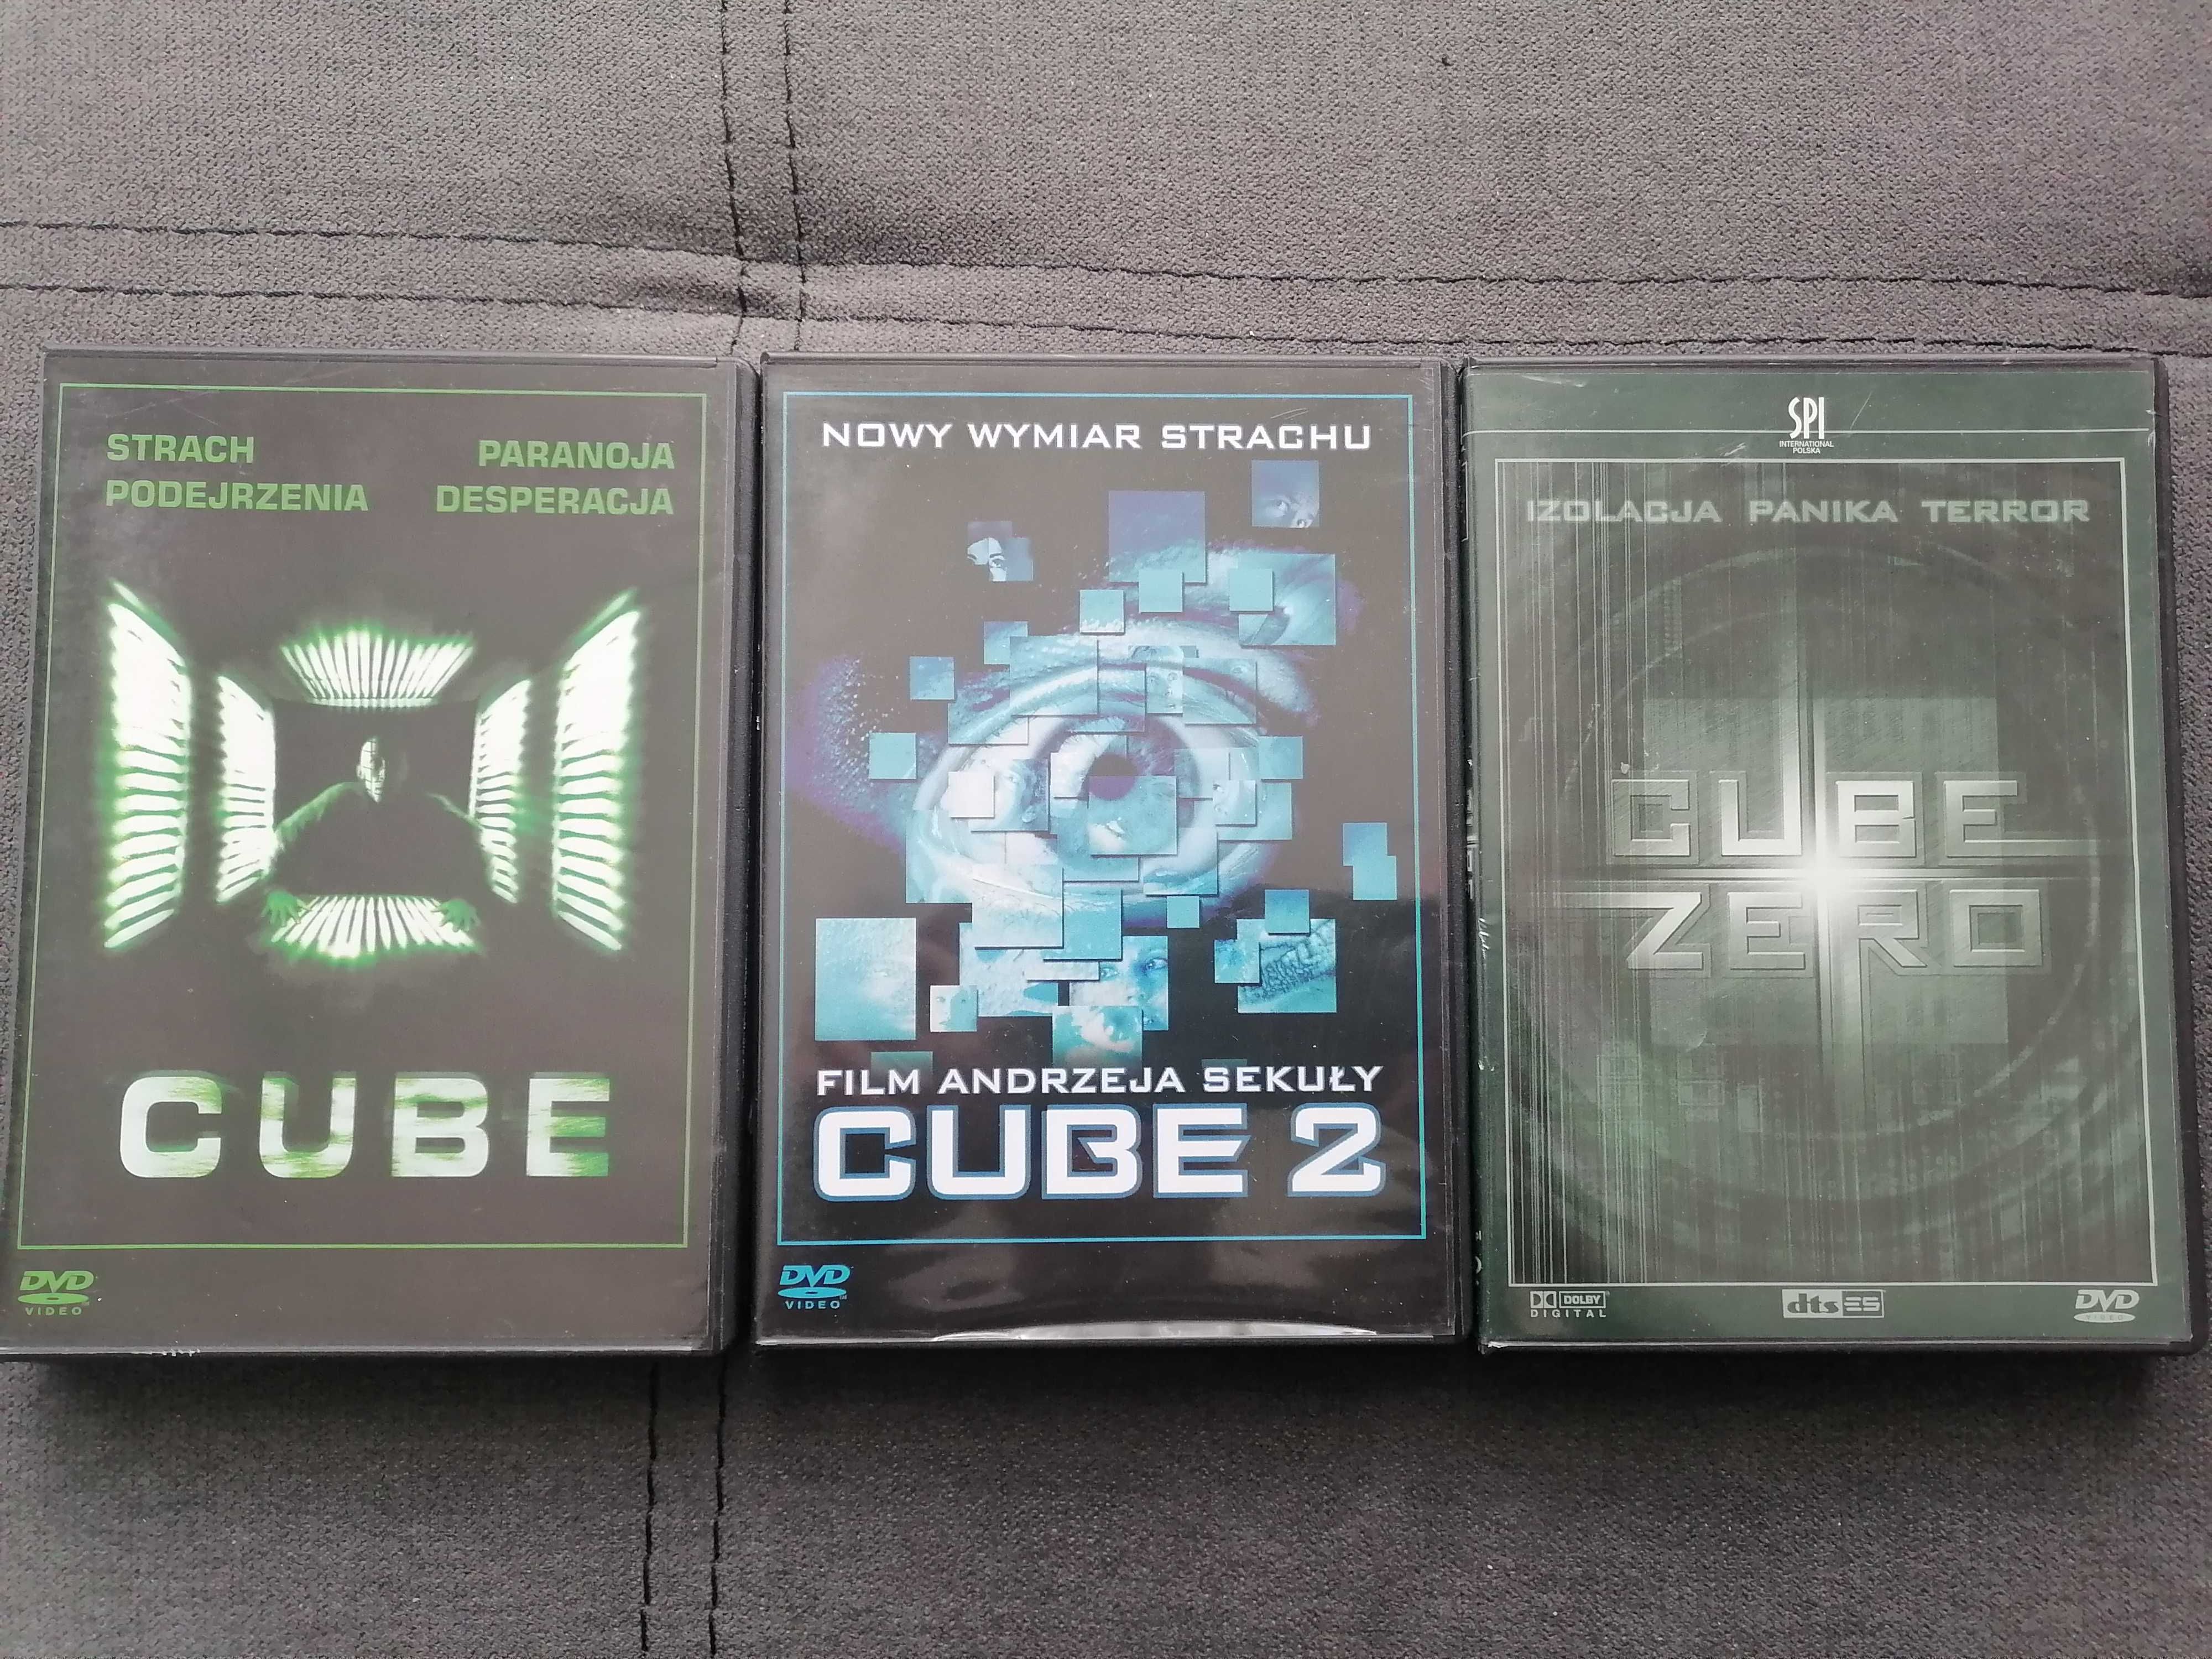 Cube Cube 2 Cube Zero 3x DVD